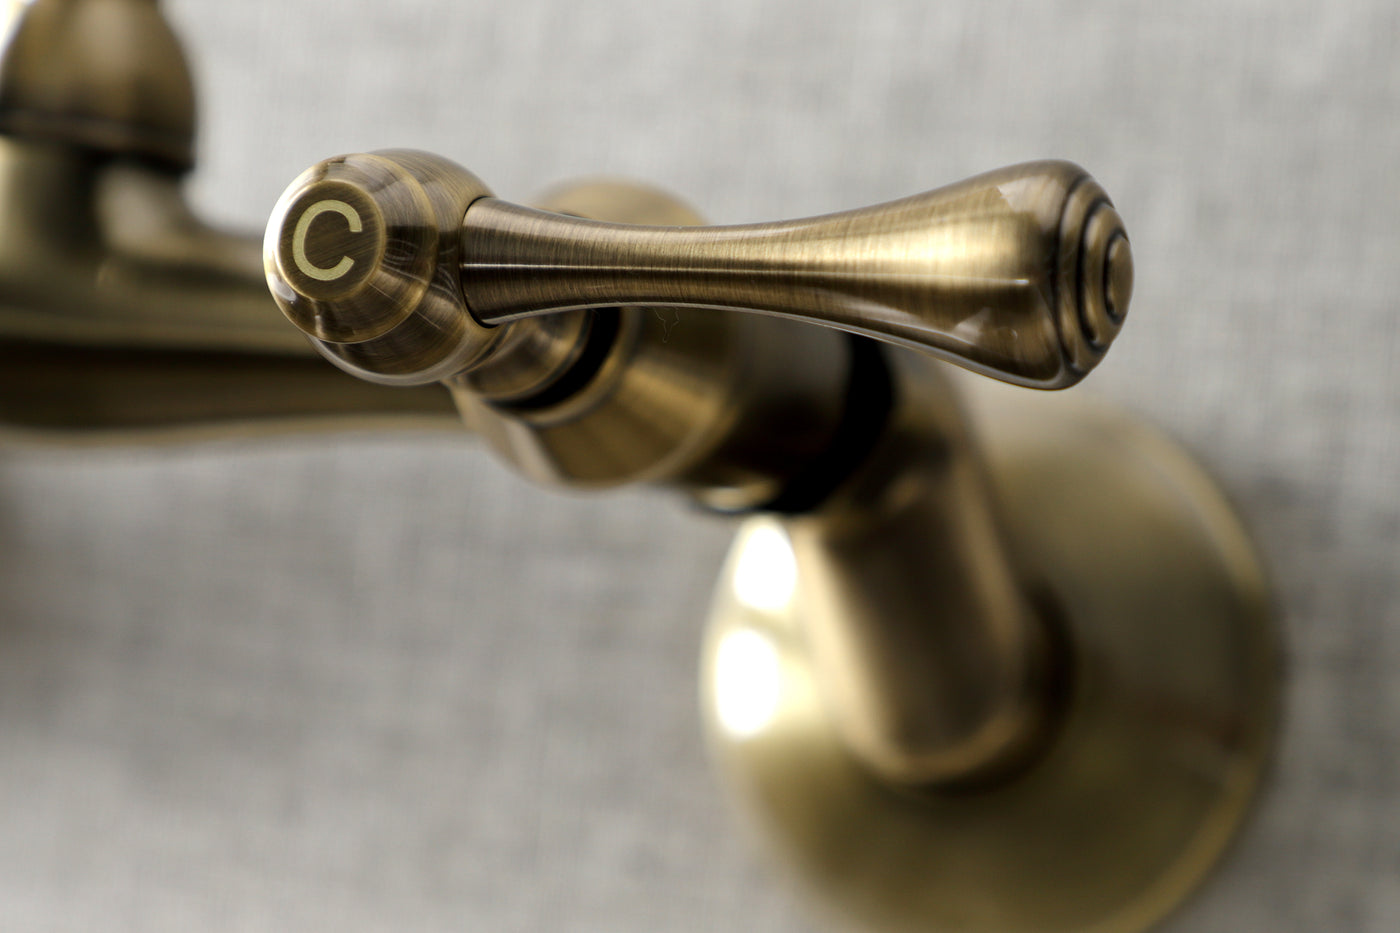 Elements of Design ES3133L Adjustable Center Wall Mount Kitchen Faucet, Antique Brass